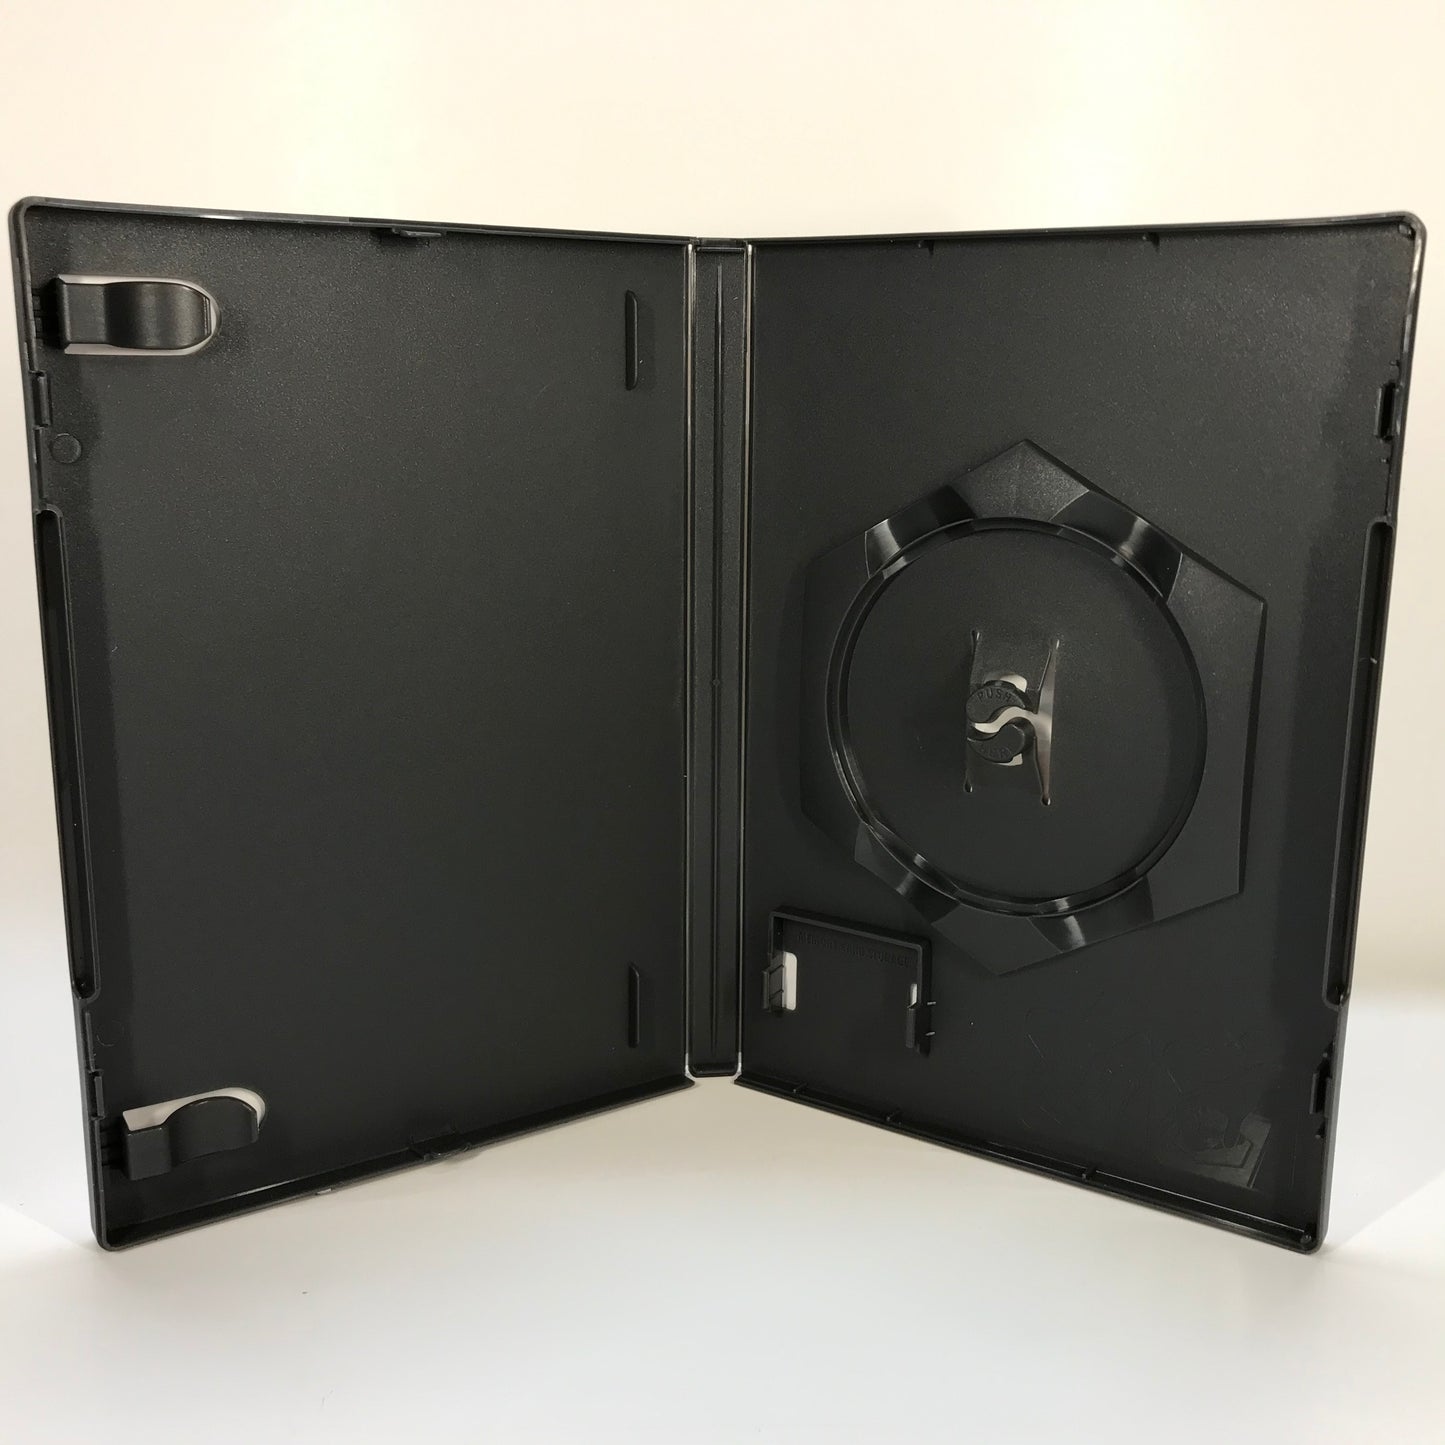 GameCube Replacement Case - NO GAME - 4x4 Evo 2